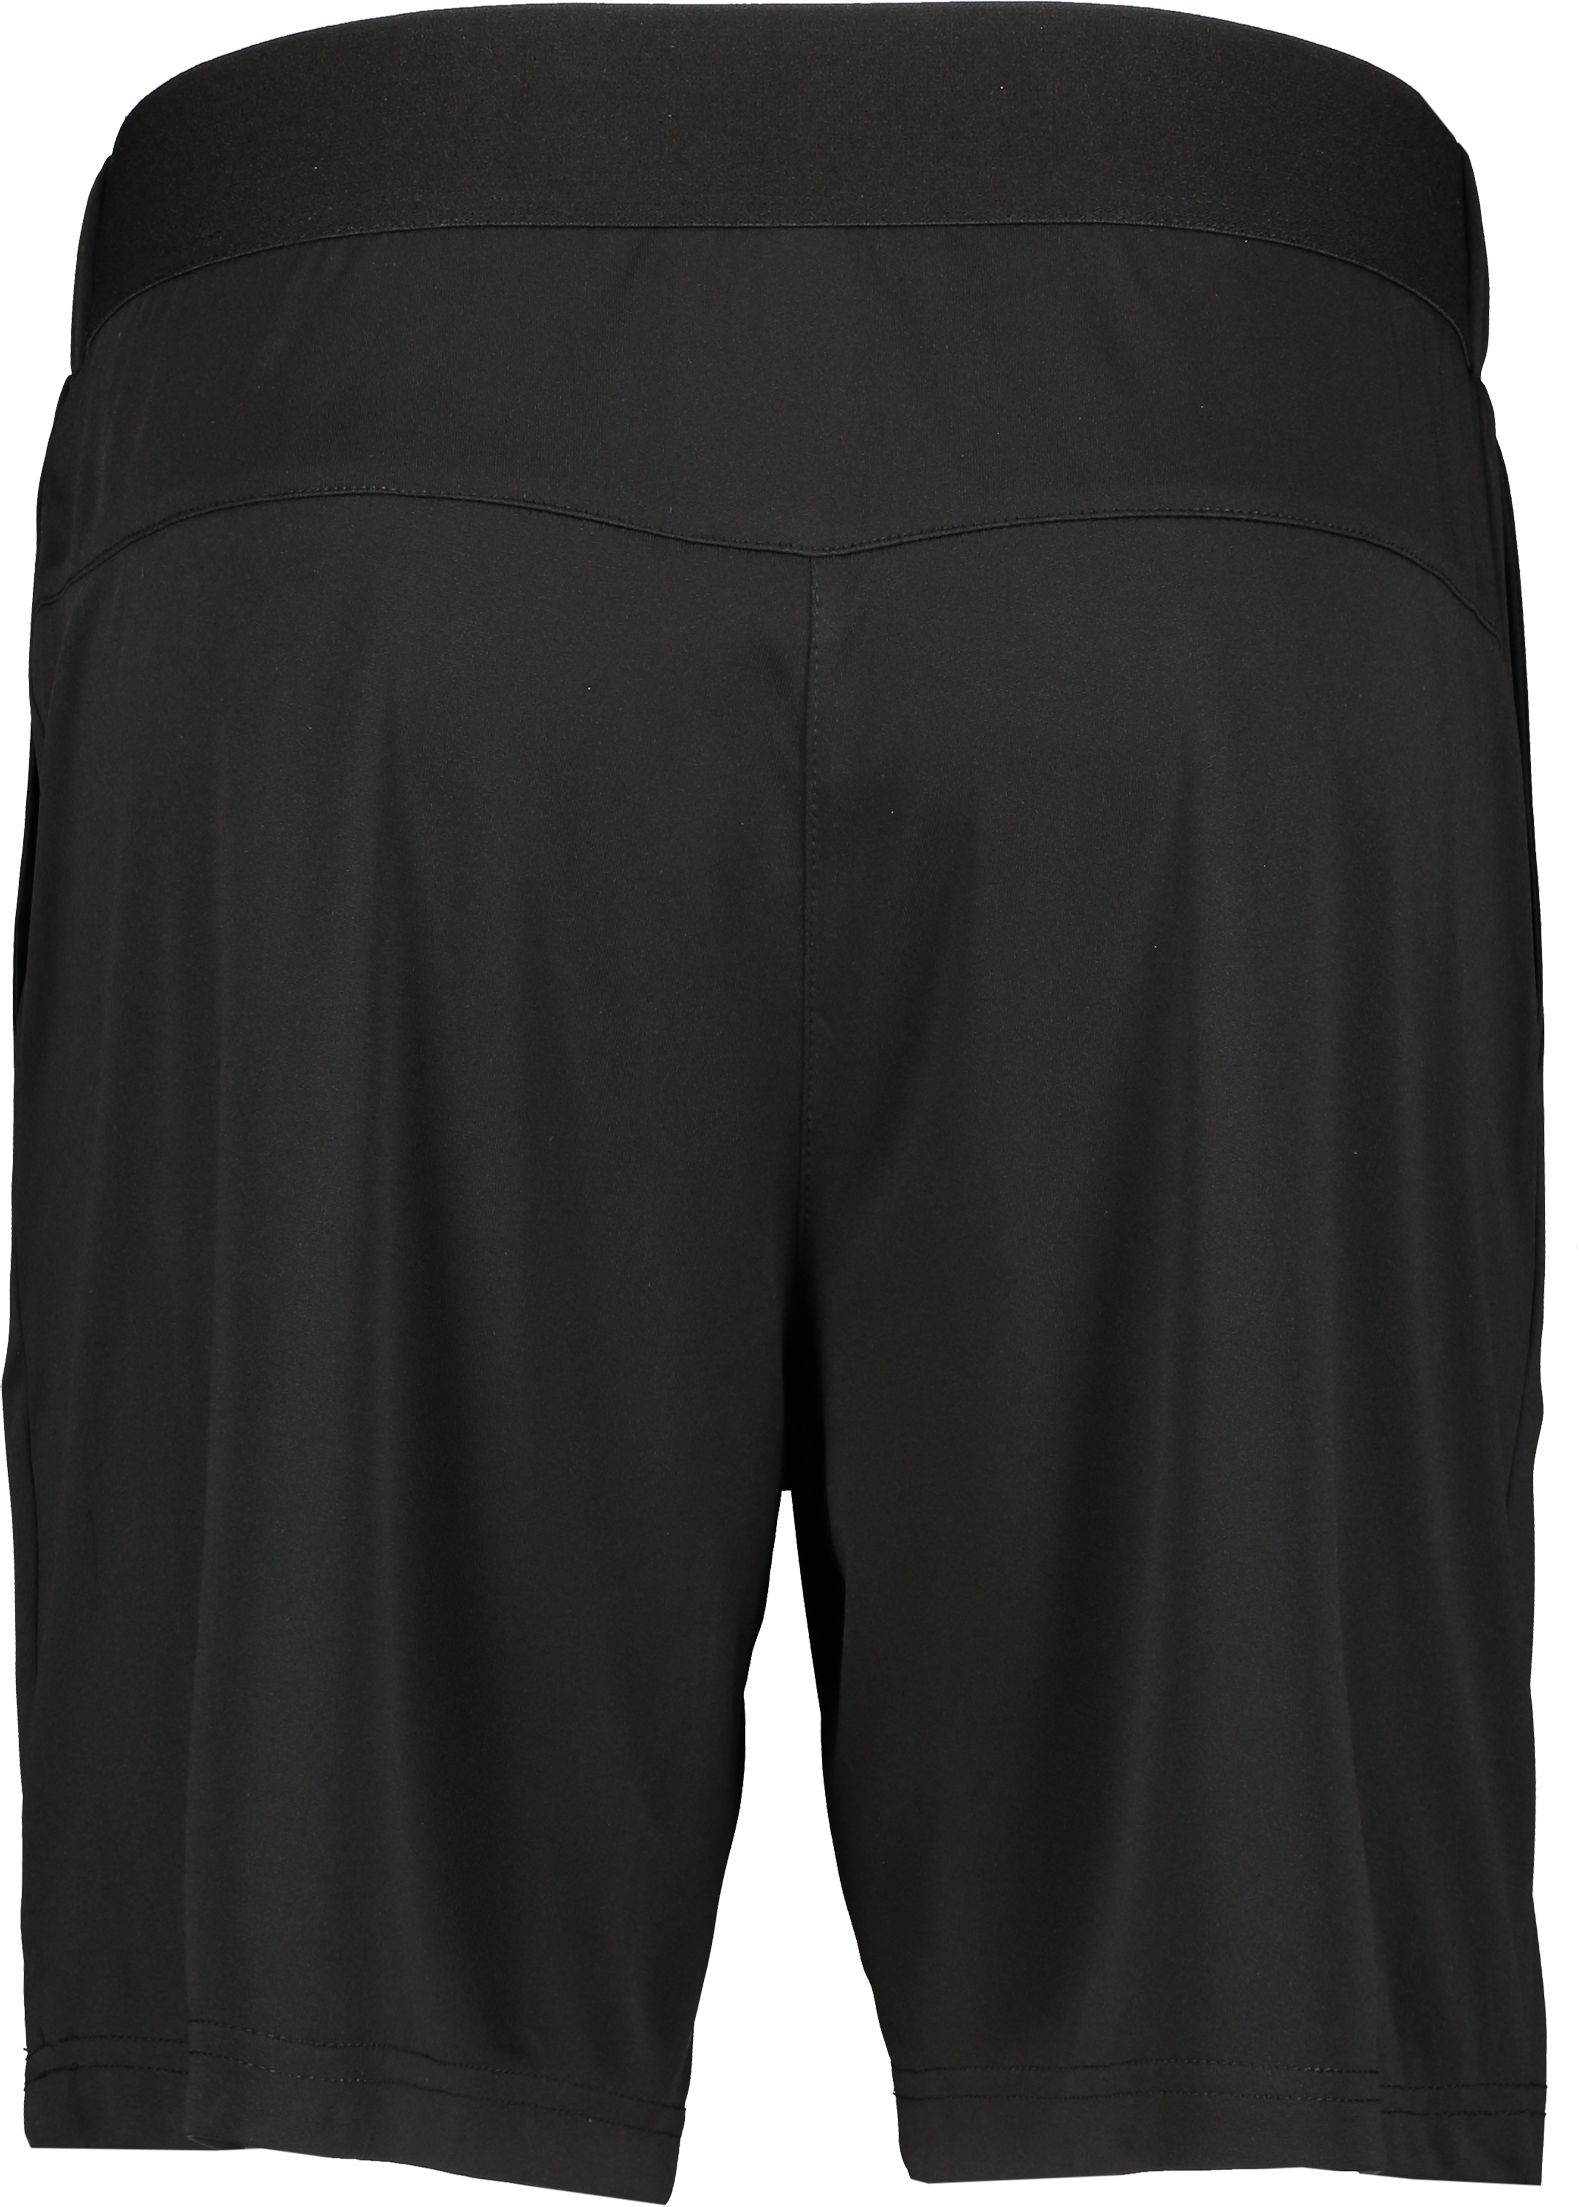 CLIQUE, Basic Active Shorts